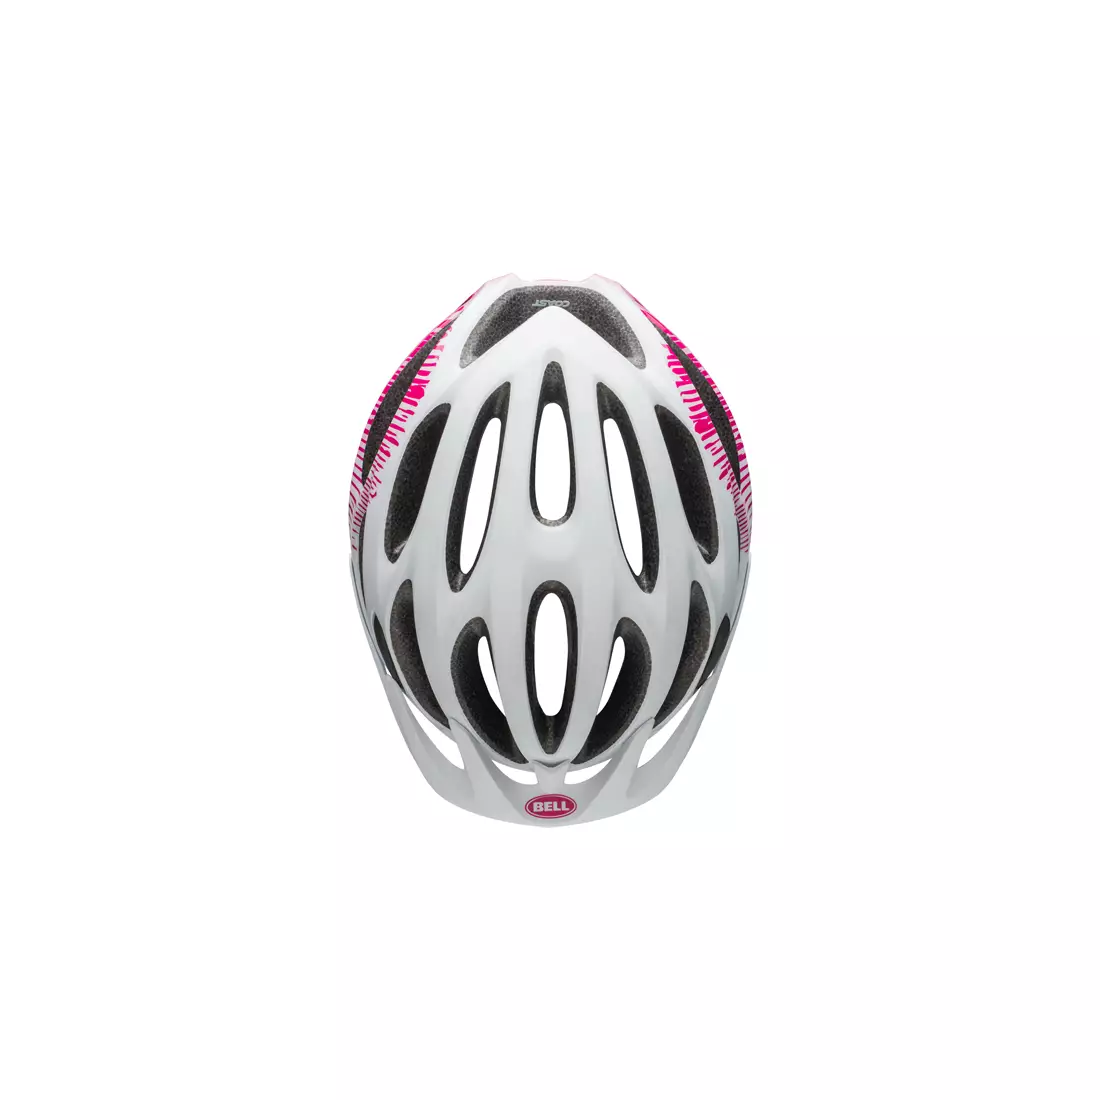 BELL MTB COAST JOY RIDE MIPS BEL-7088751 women's bicycle helmet gloss white cherry fibers